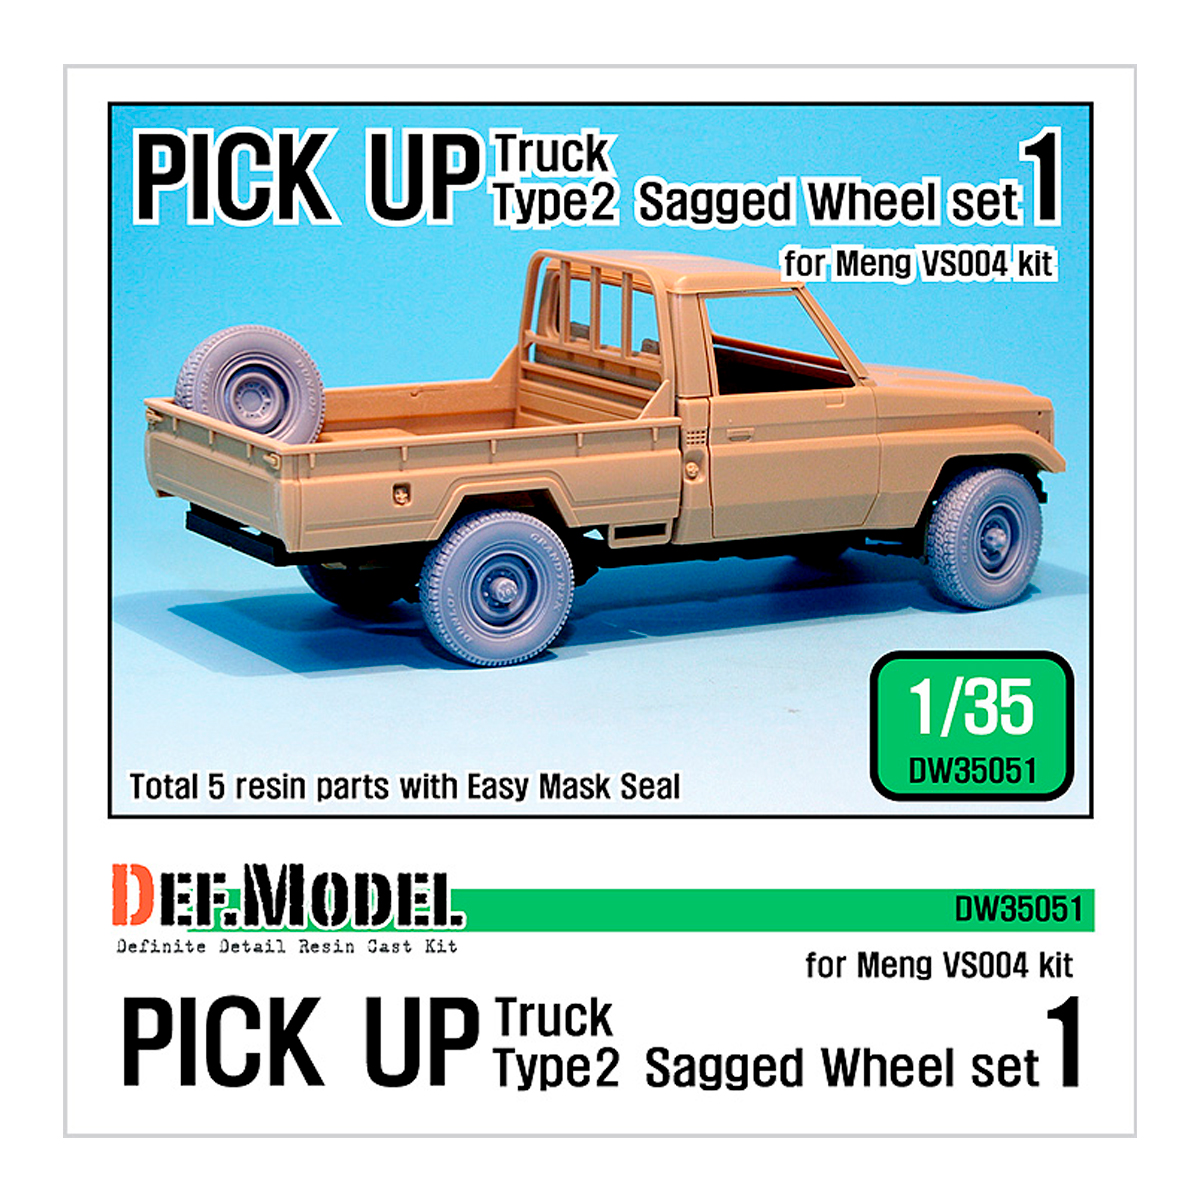 Pick up truck Type 2 Sagged Wheel set 1 (for Meng VS004 1/35)